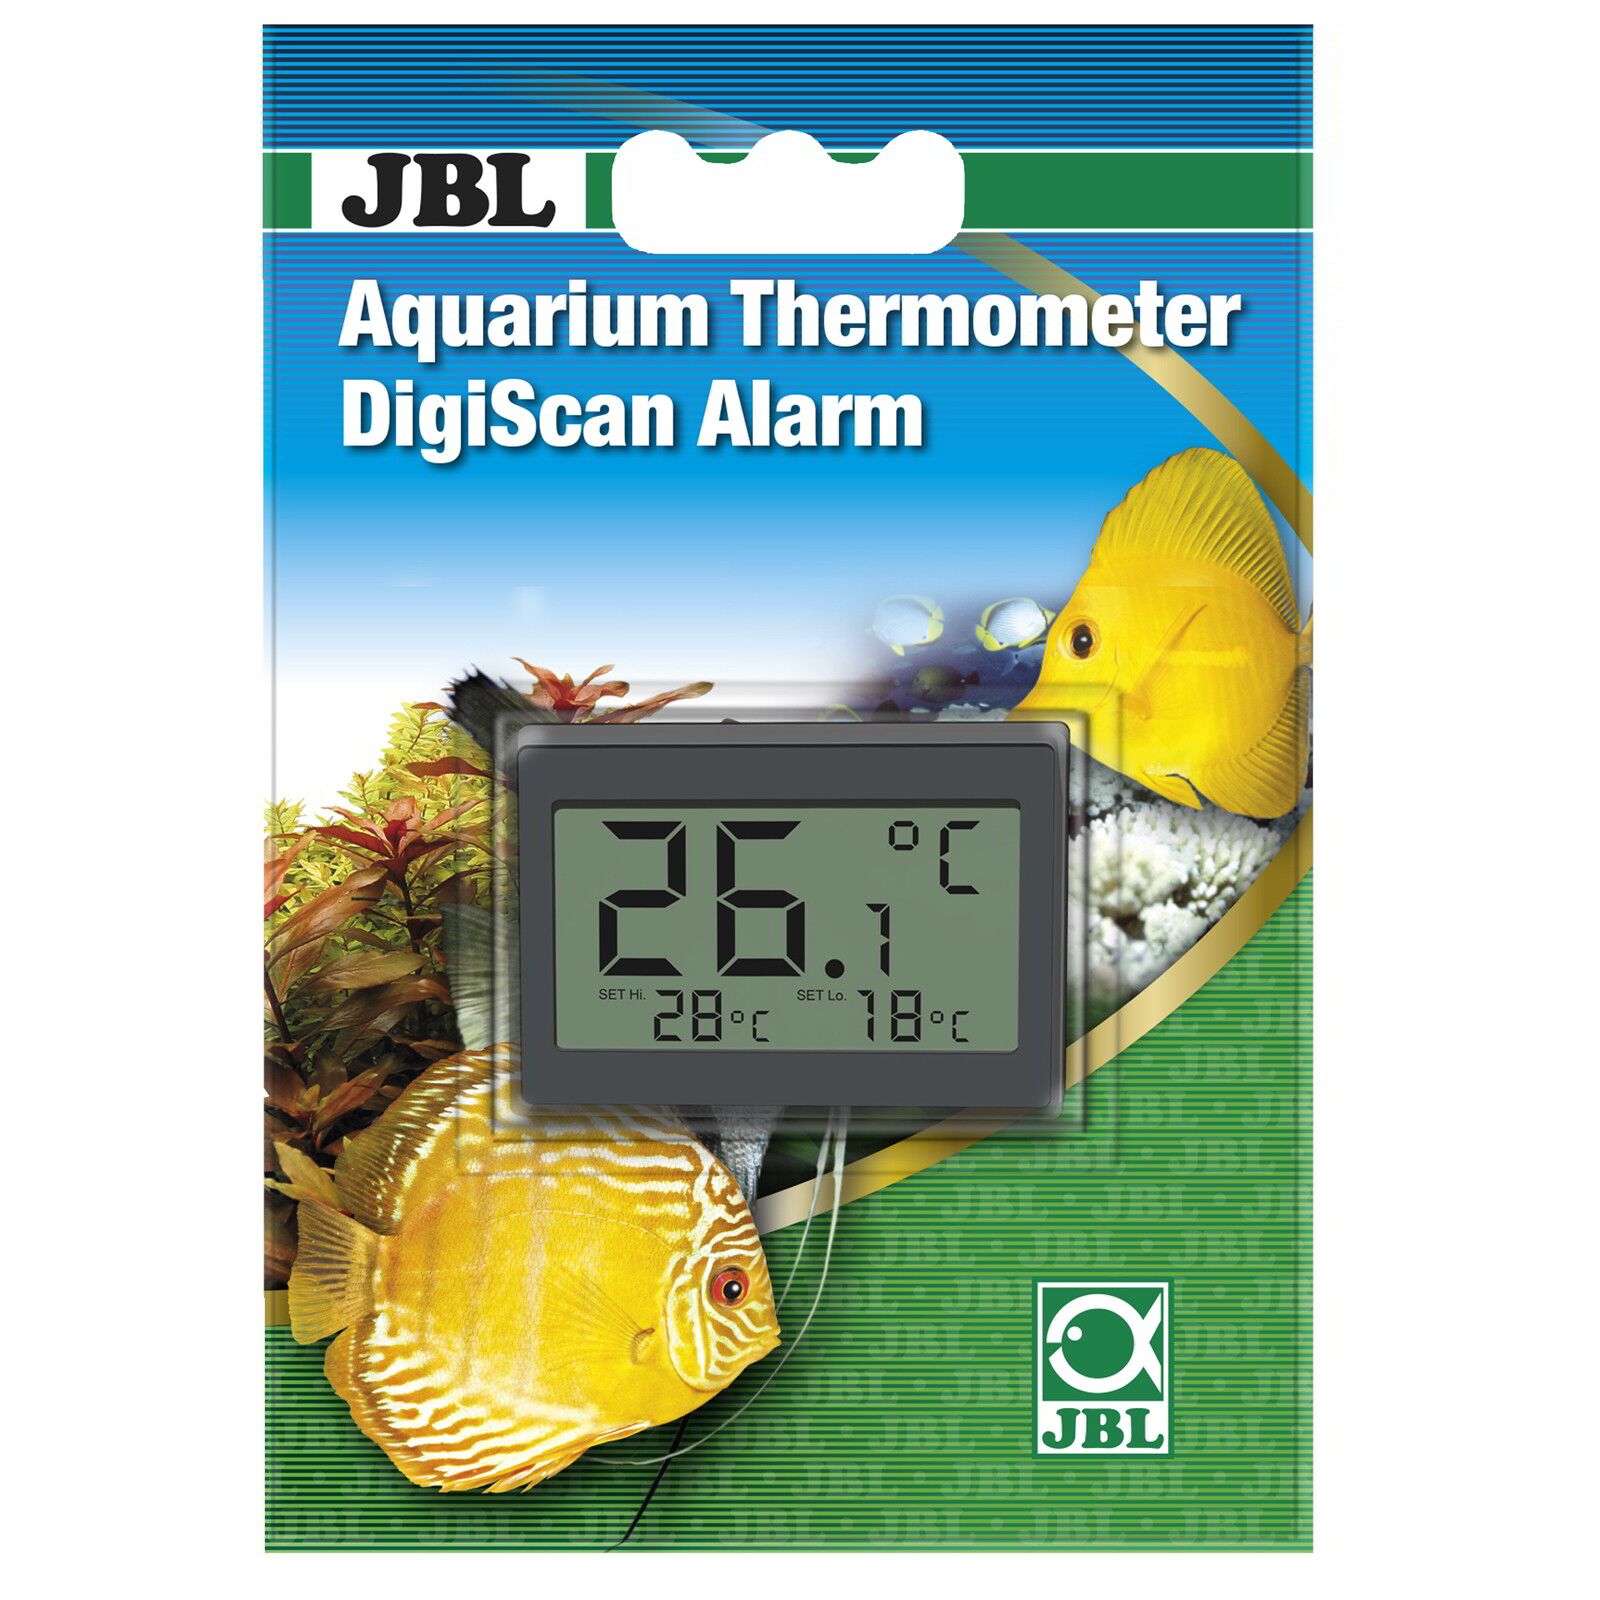 JBL Aquarium Thermometer Digiscan